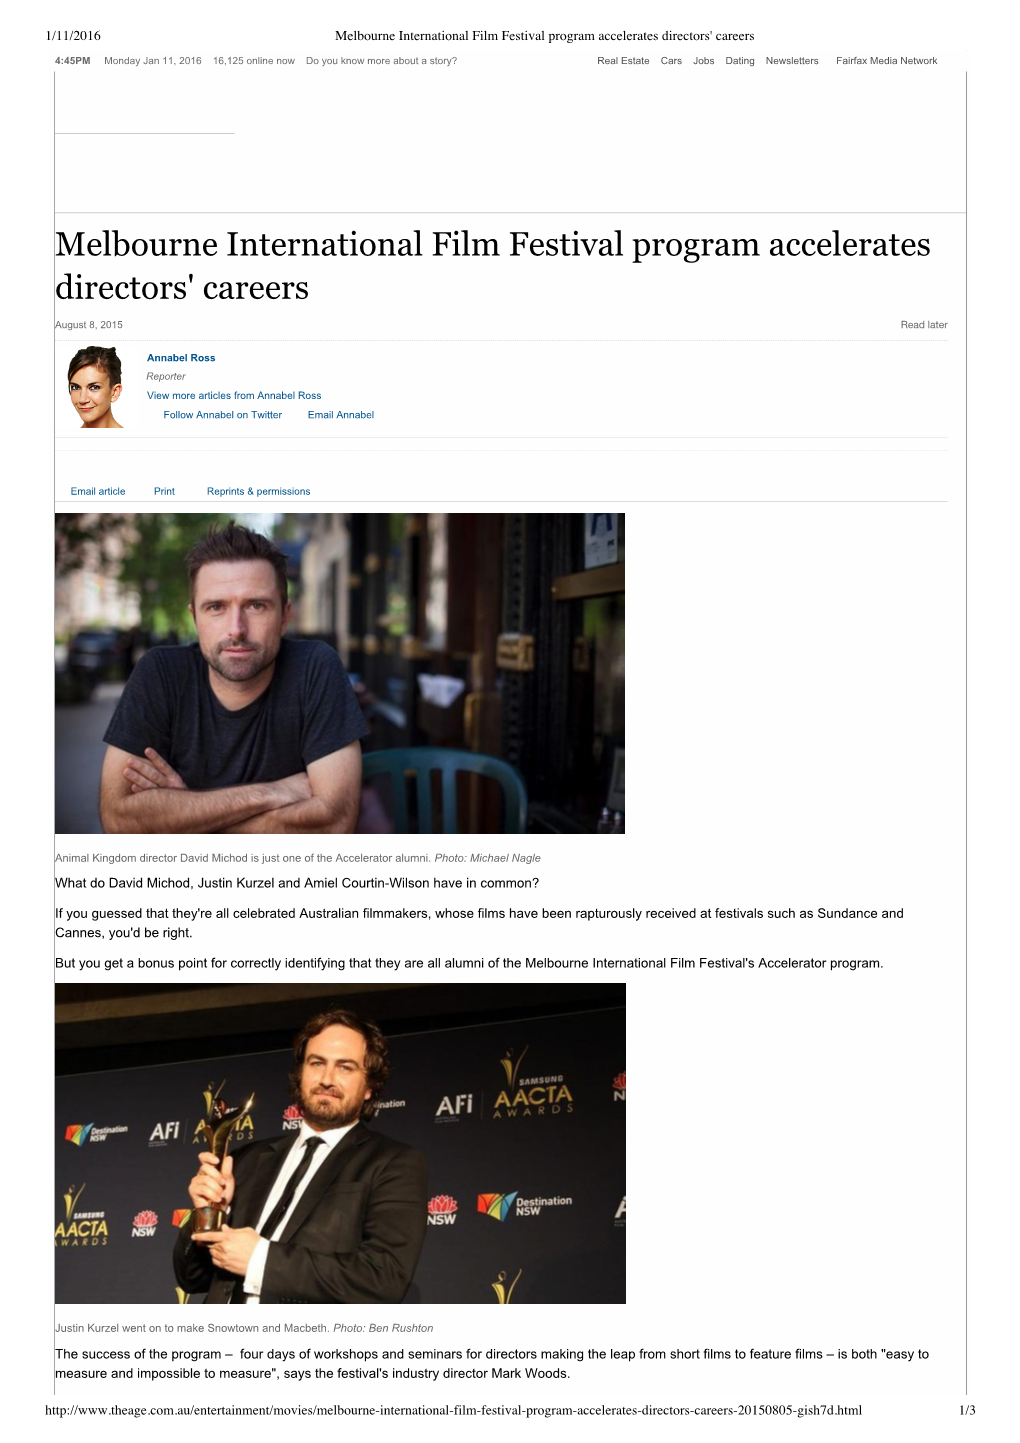 Melbourne International Film Festival Program Accelerates Directors' Careers